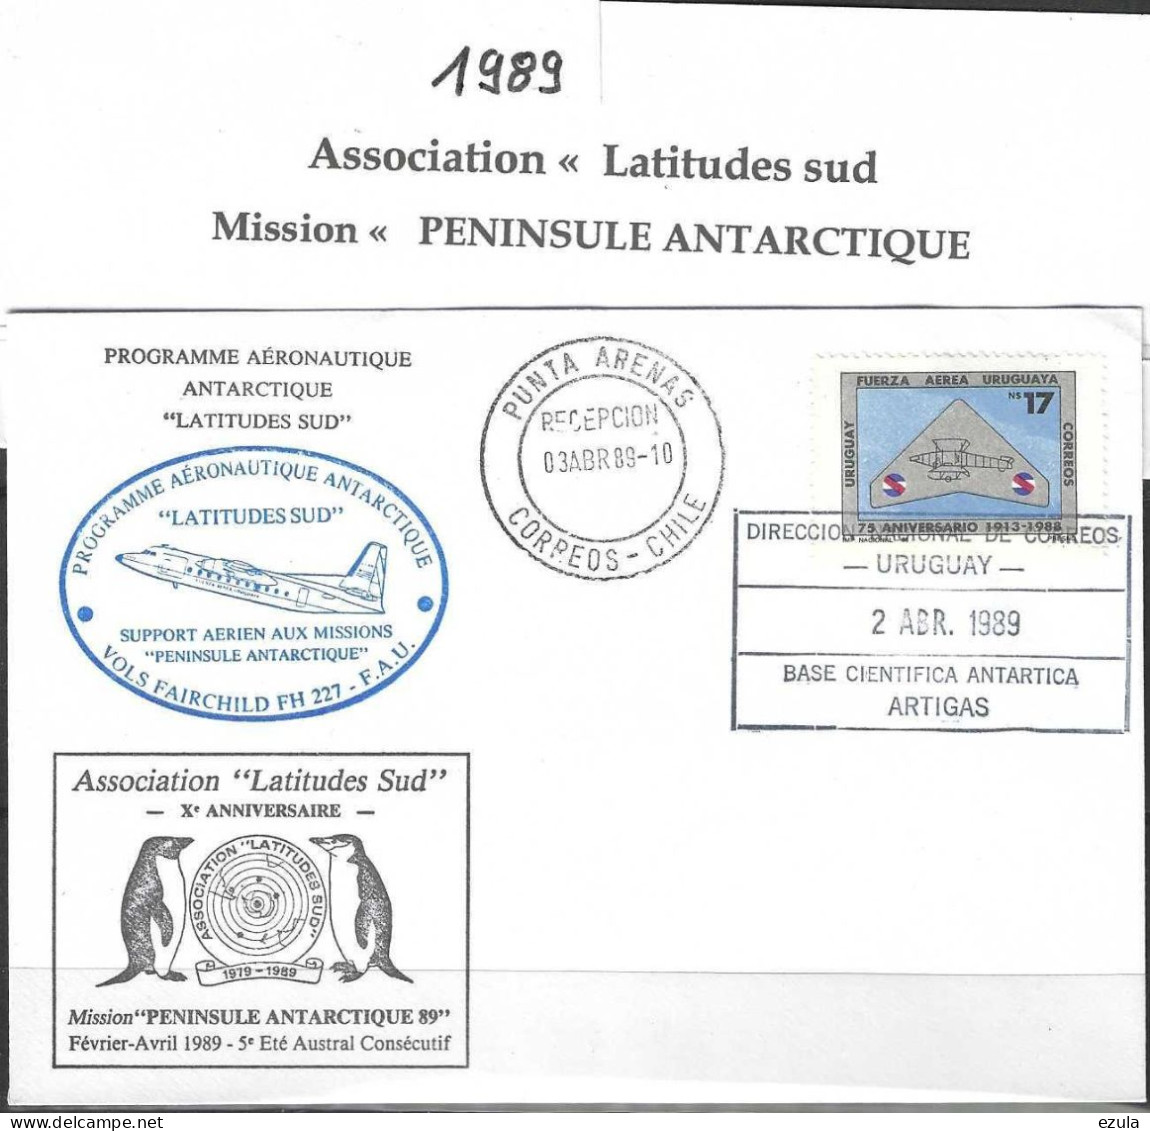 Uruguay -Association Latitude Sud  Mission Péninsule Antarctique 89 - Internationales Polarjahr